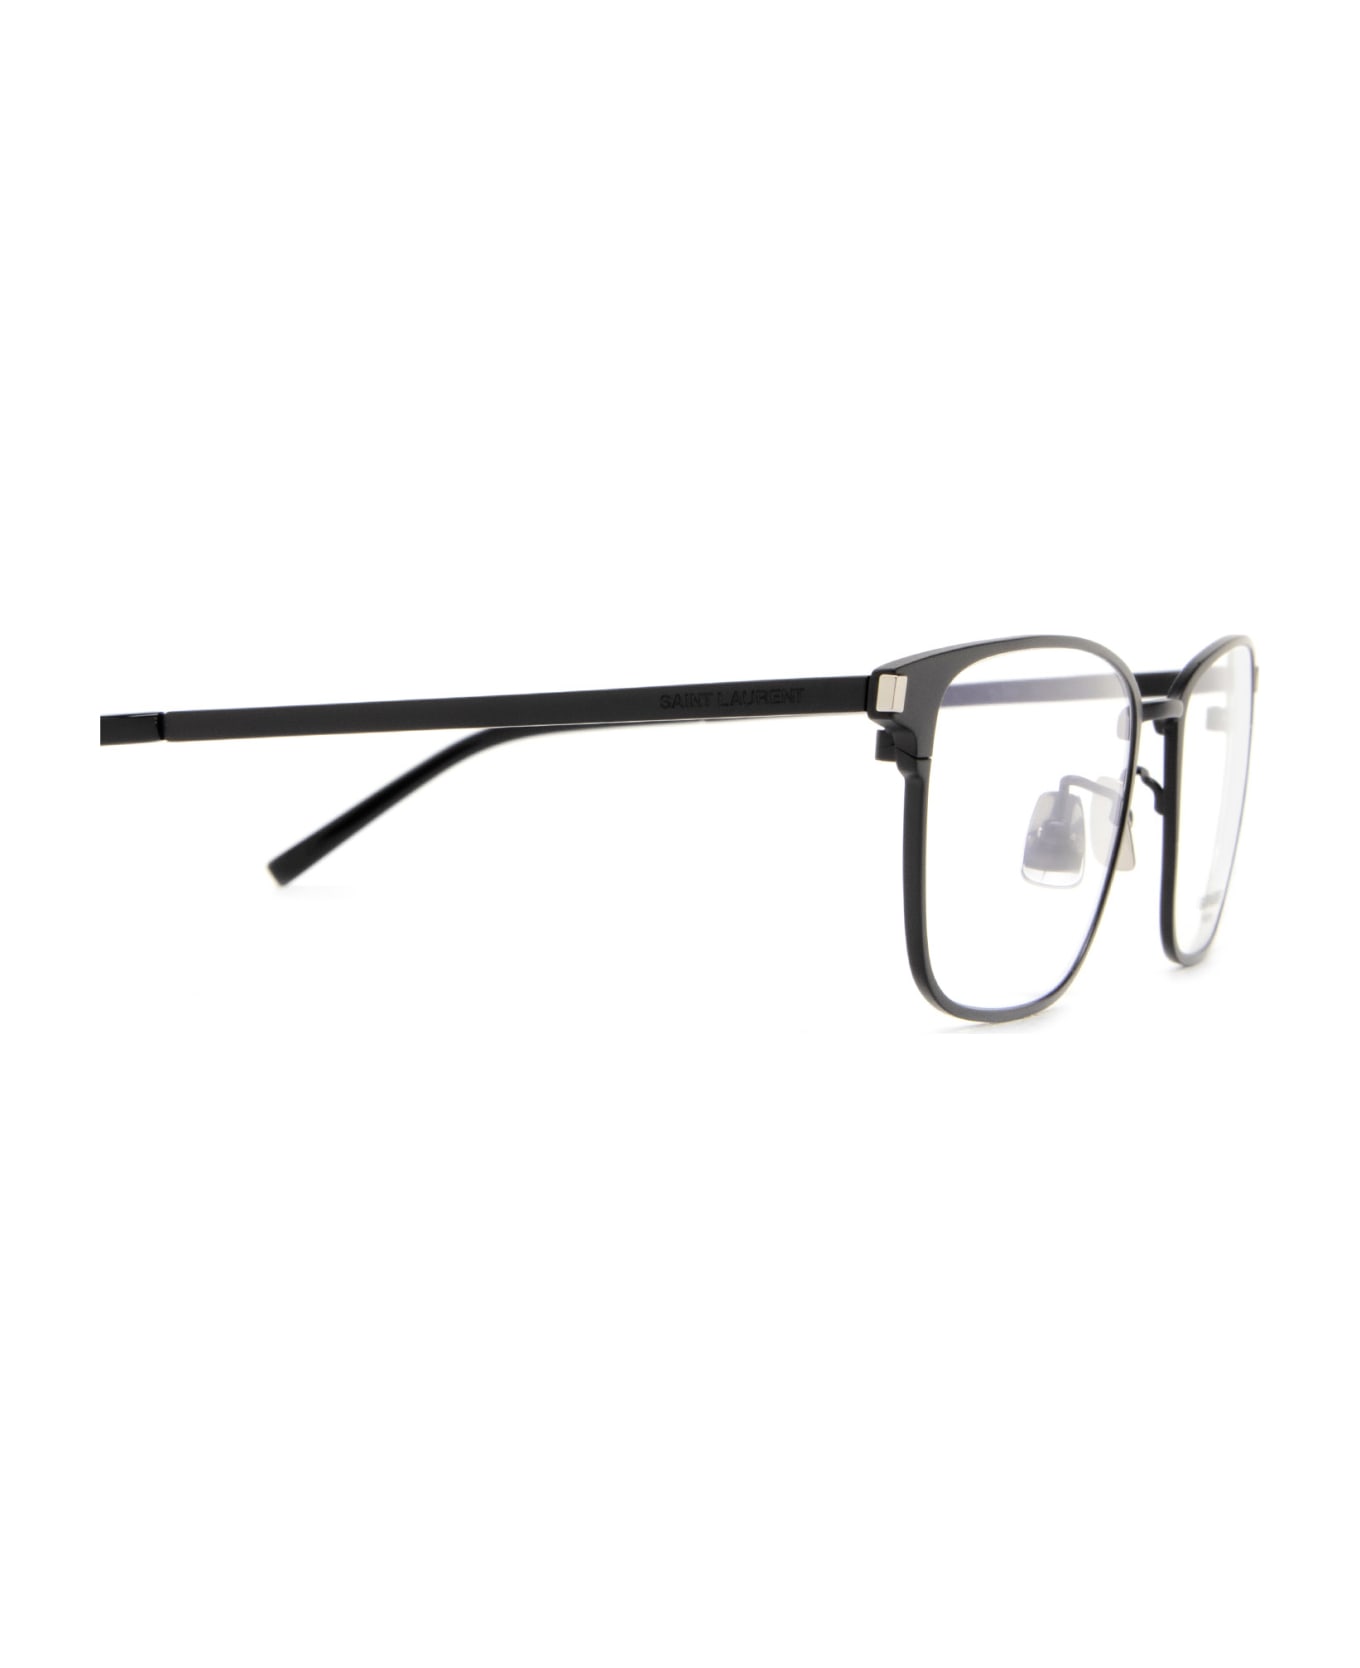 Saint Laurent Eyewear Sl 585 Black Glasses - Black